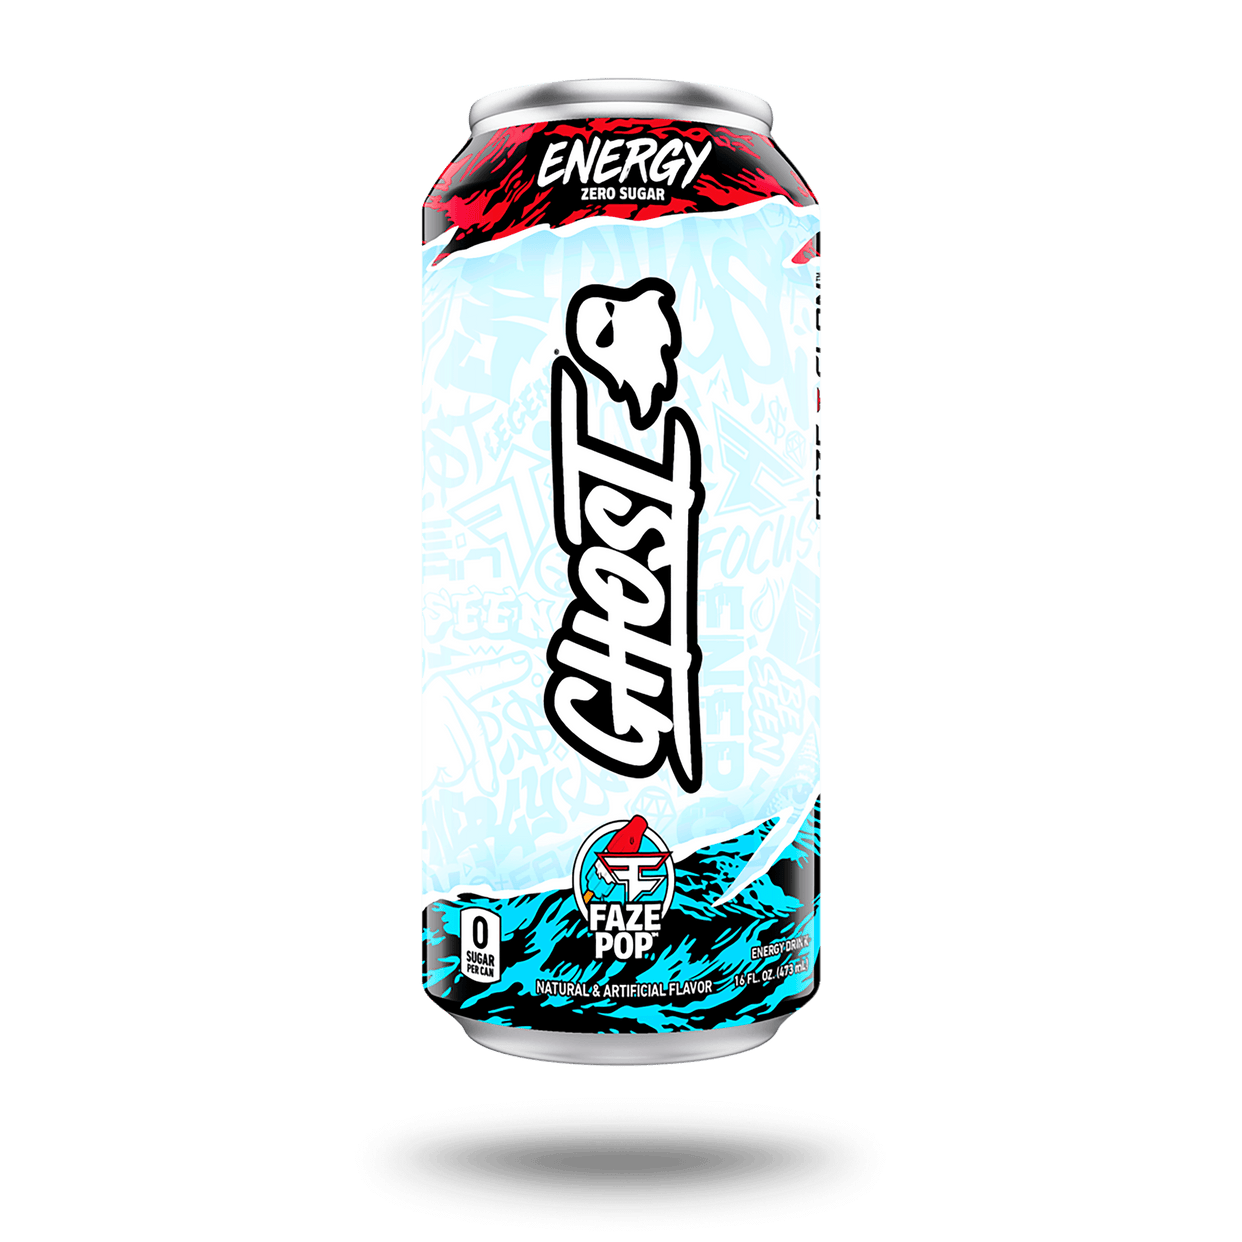 Ghost Energy Drink